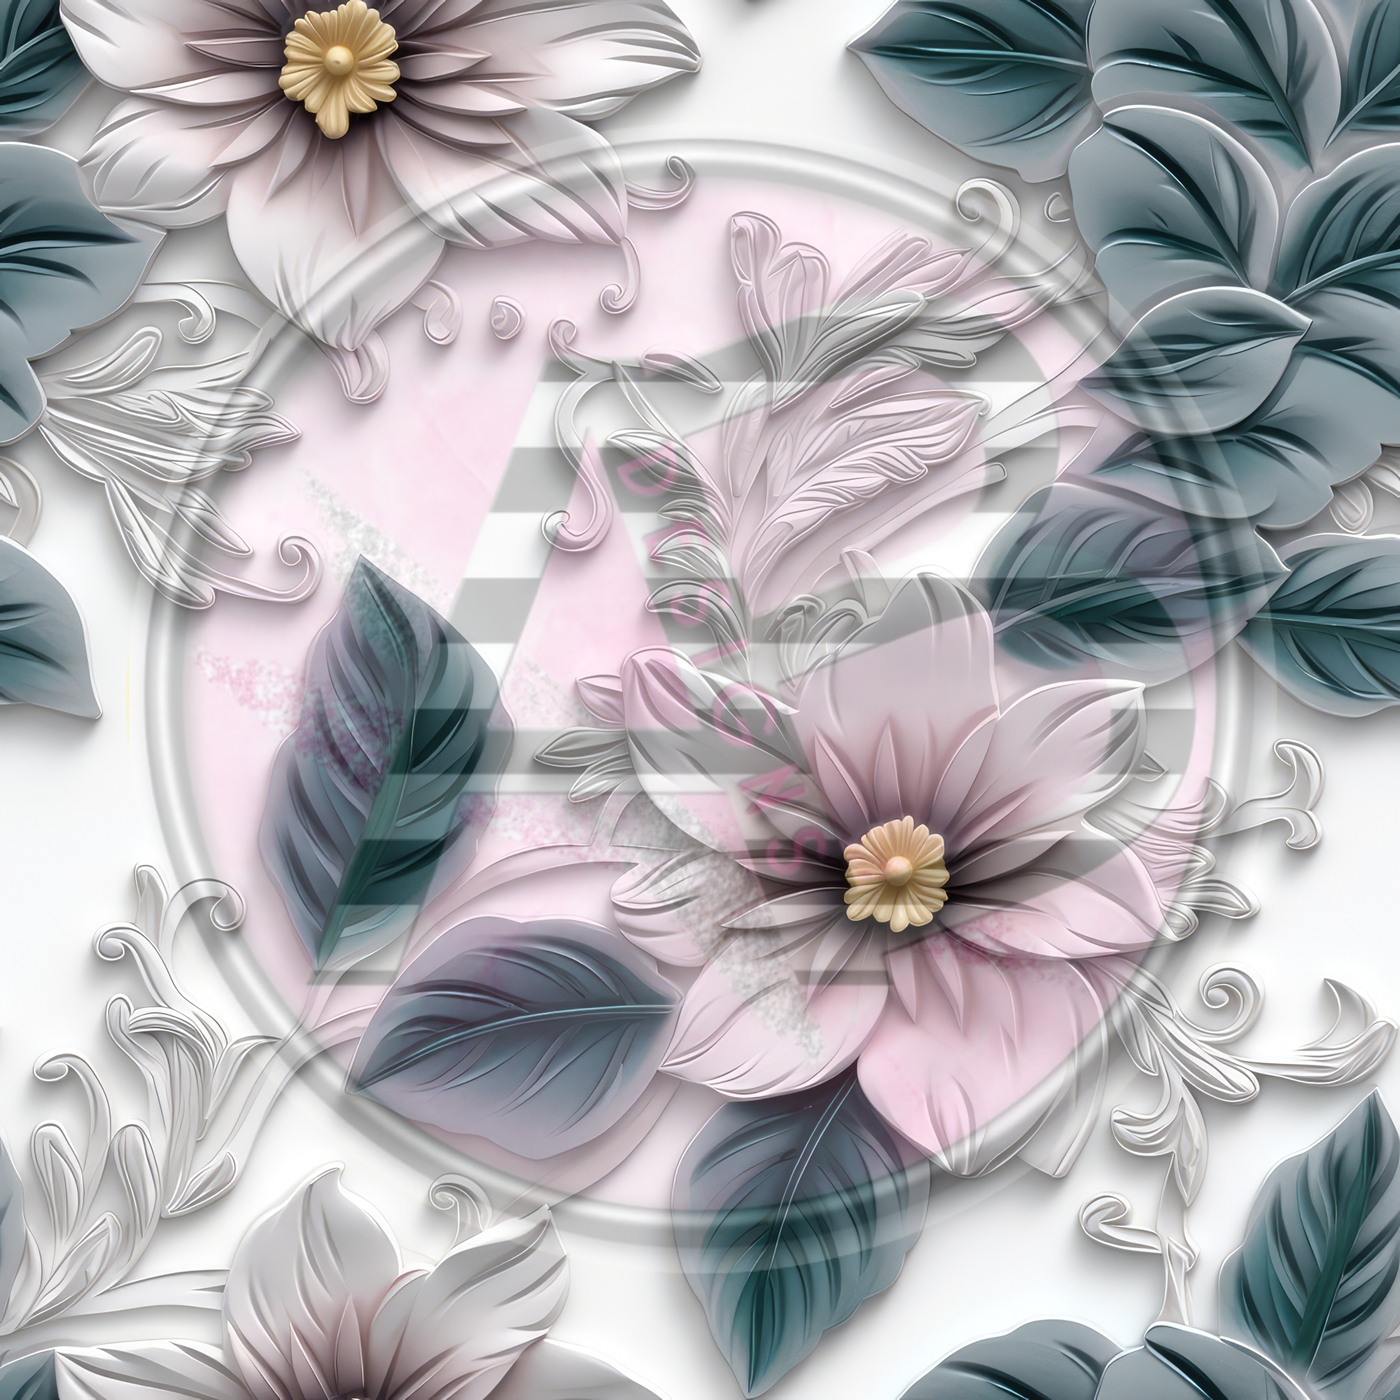 Adhesive Patterned Vinyl - 3D Floral 16